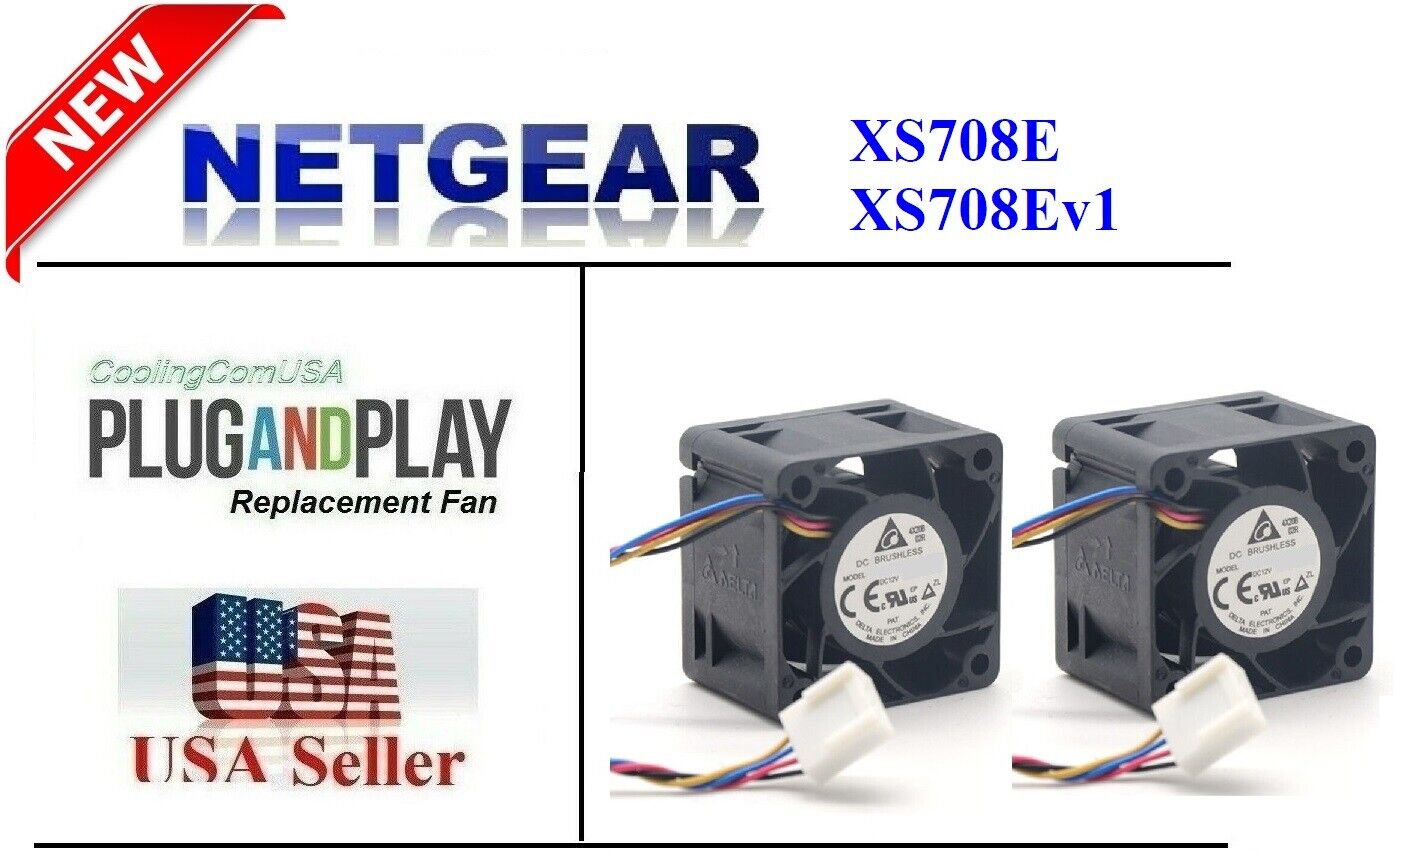 2-Pack New Delta Replacement Fans for Netgear ProSAFE XS708E XS708Ev1